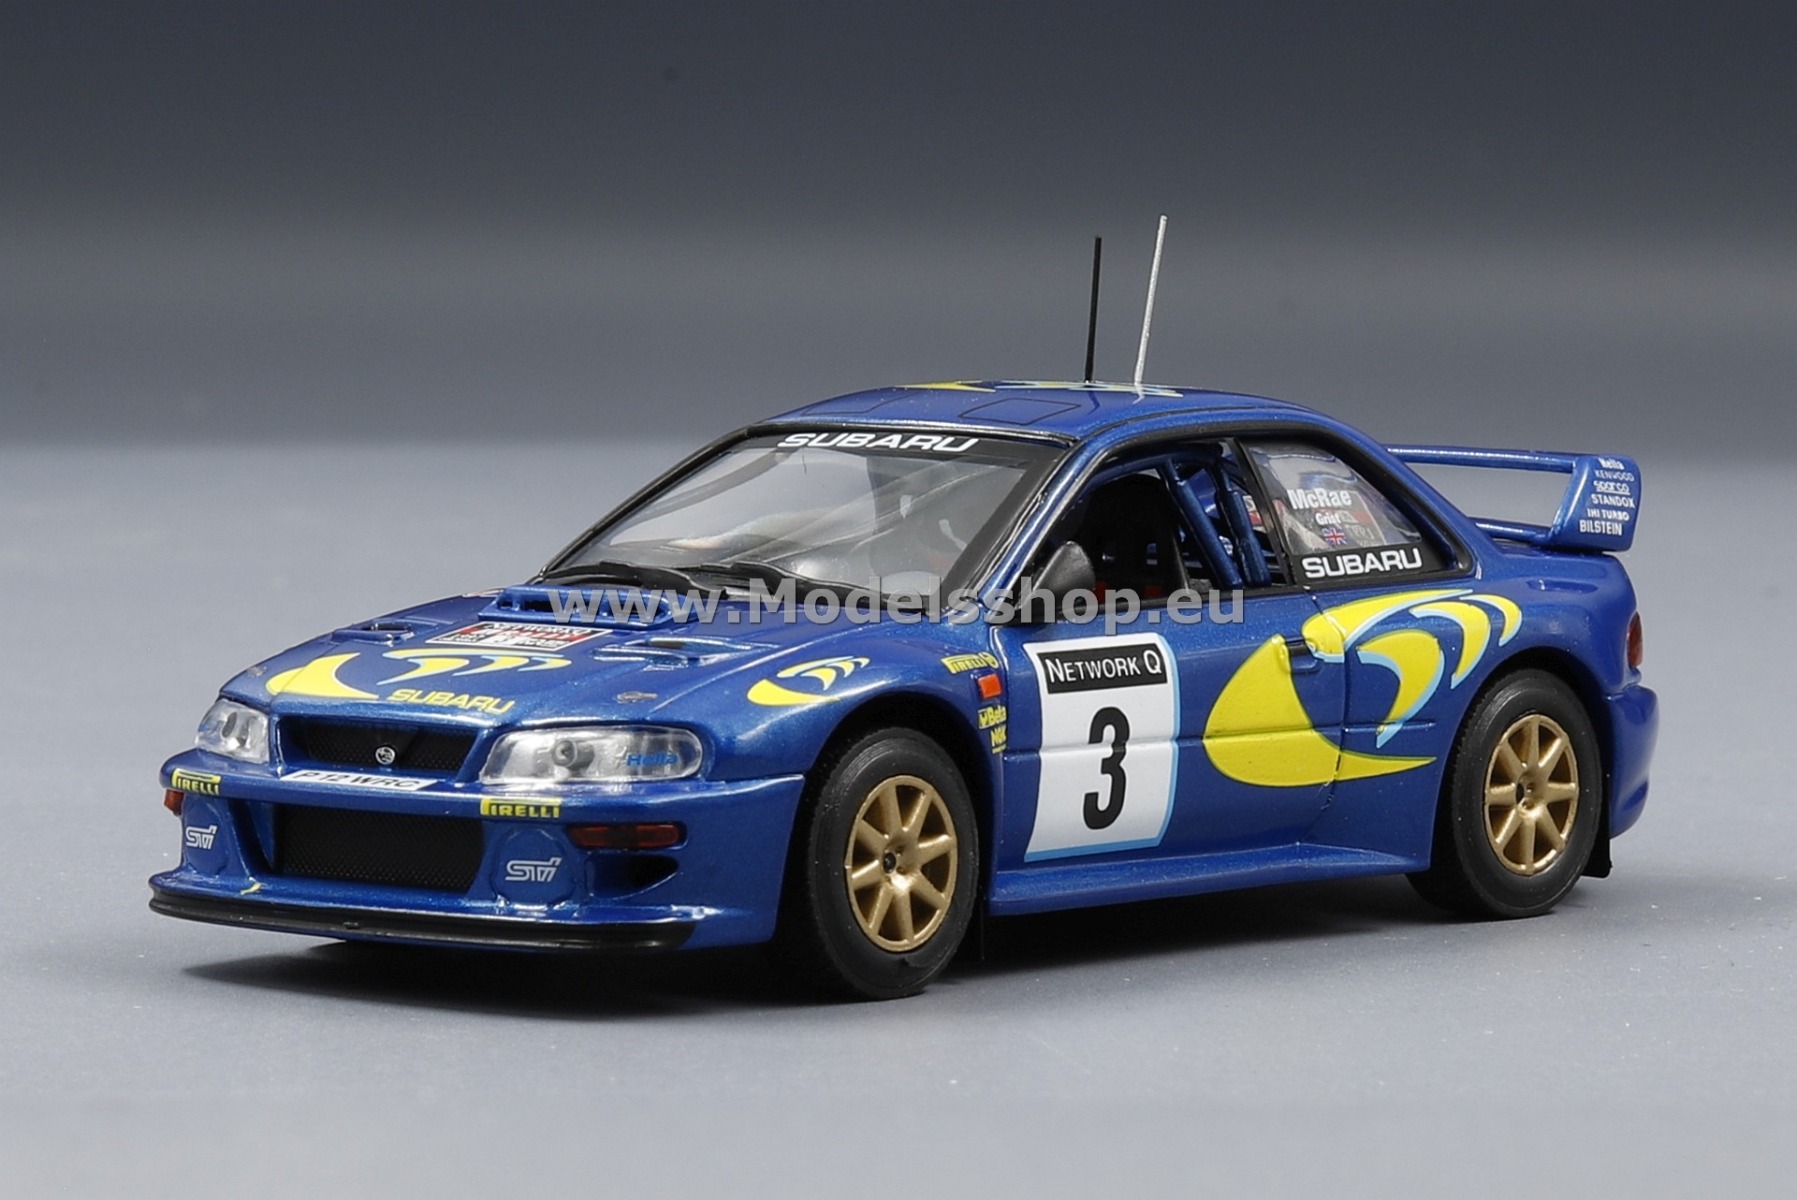 Subaru Impreza S5 WRC, No.3, Rallye WM, RAC Rally 1997 / 25th RAC anniversary Edition, C.McRae/N.Grist